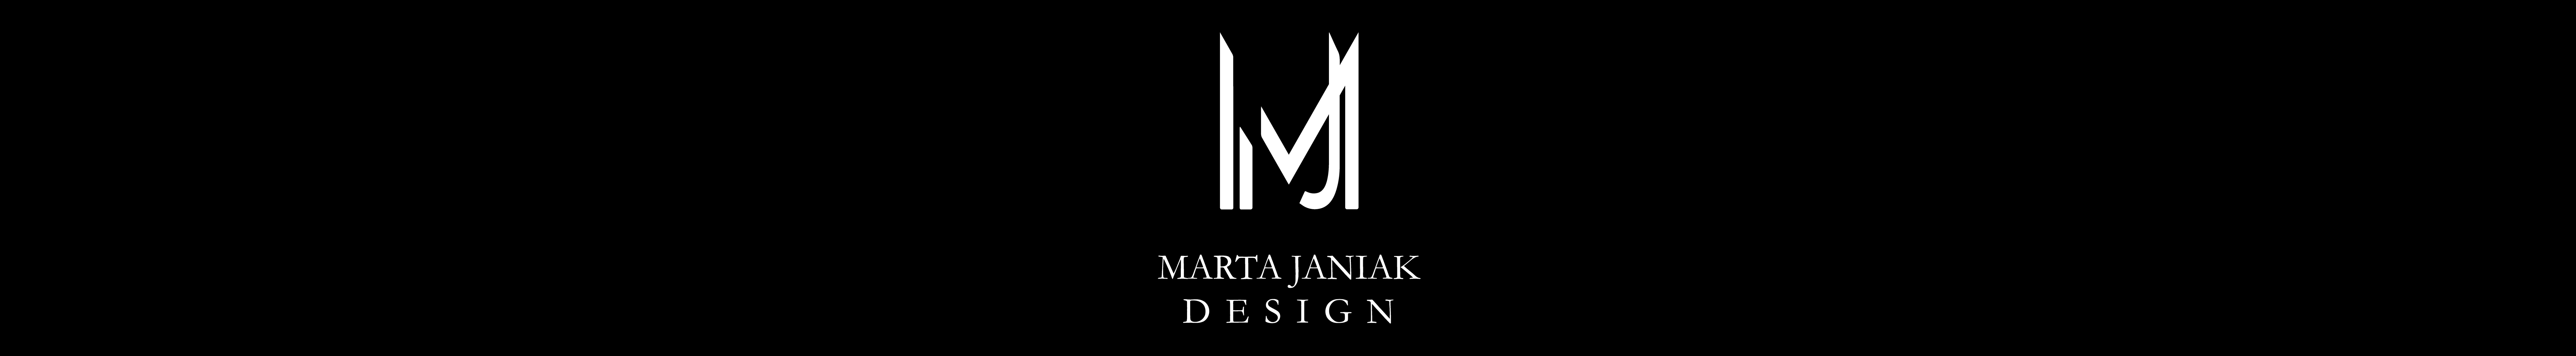 Marta Janiak's profile banner